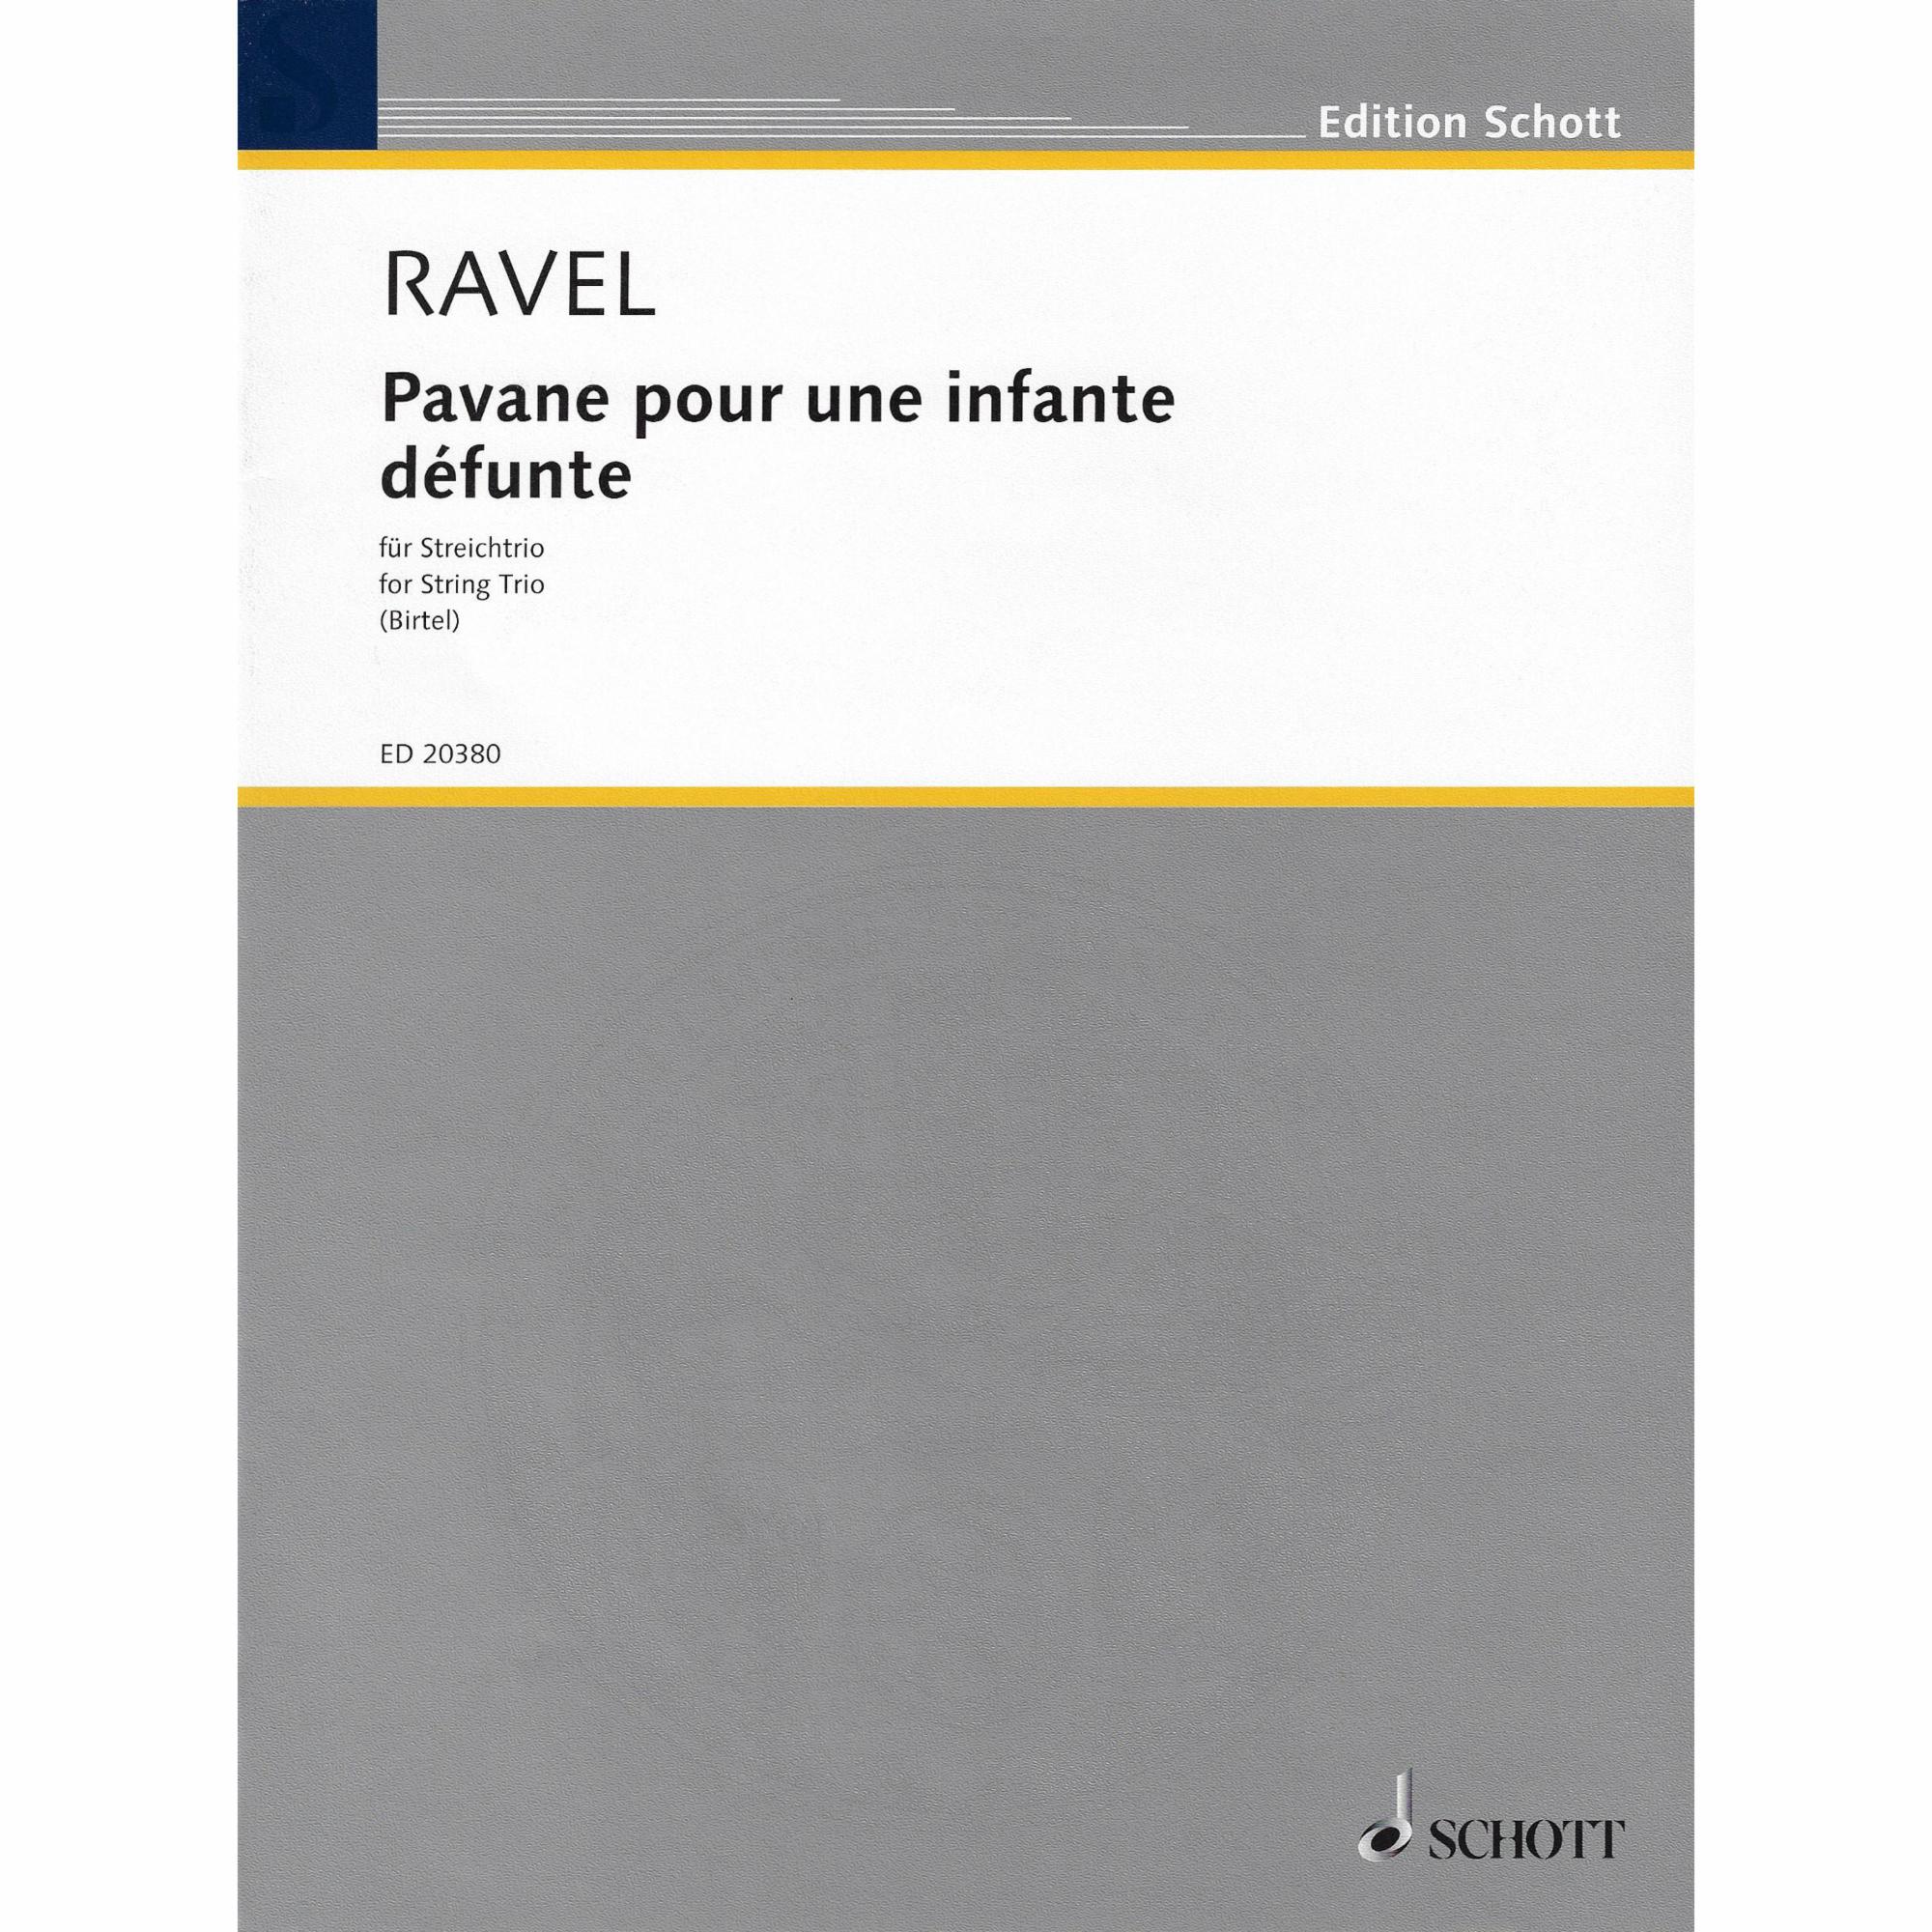 Ravel -- Pavane pour une infante defunte for Violin, Viola, and Cello